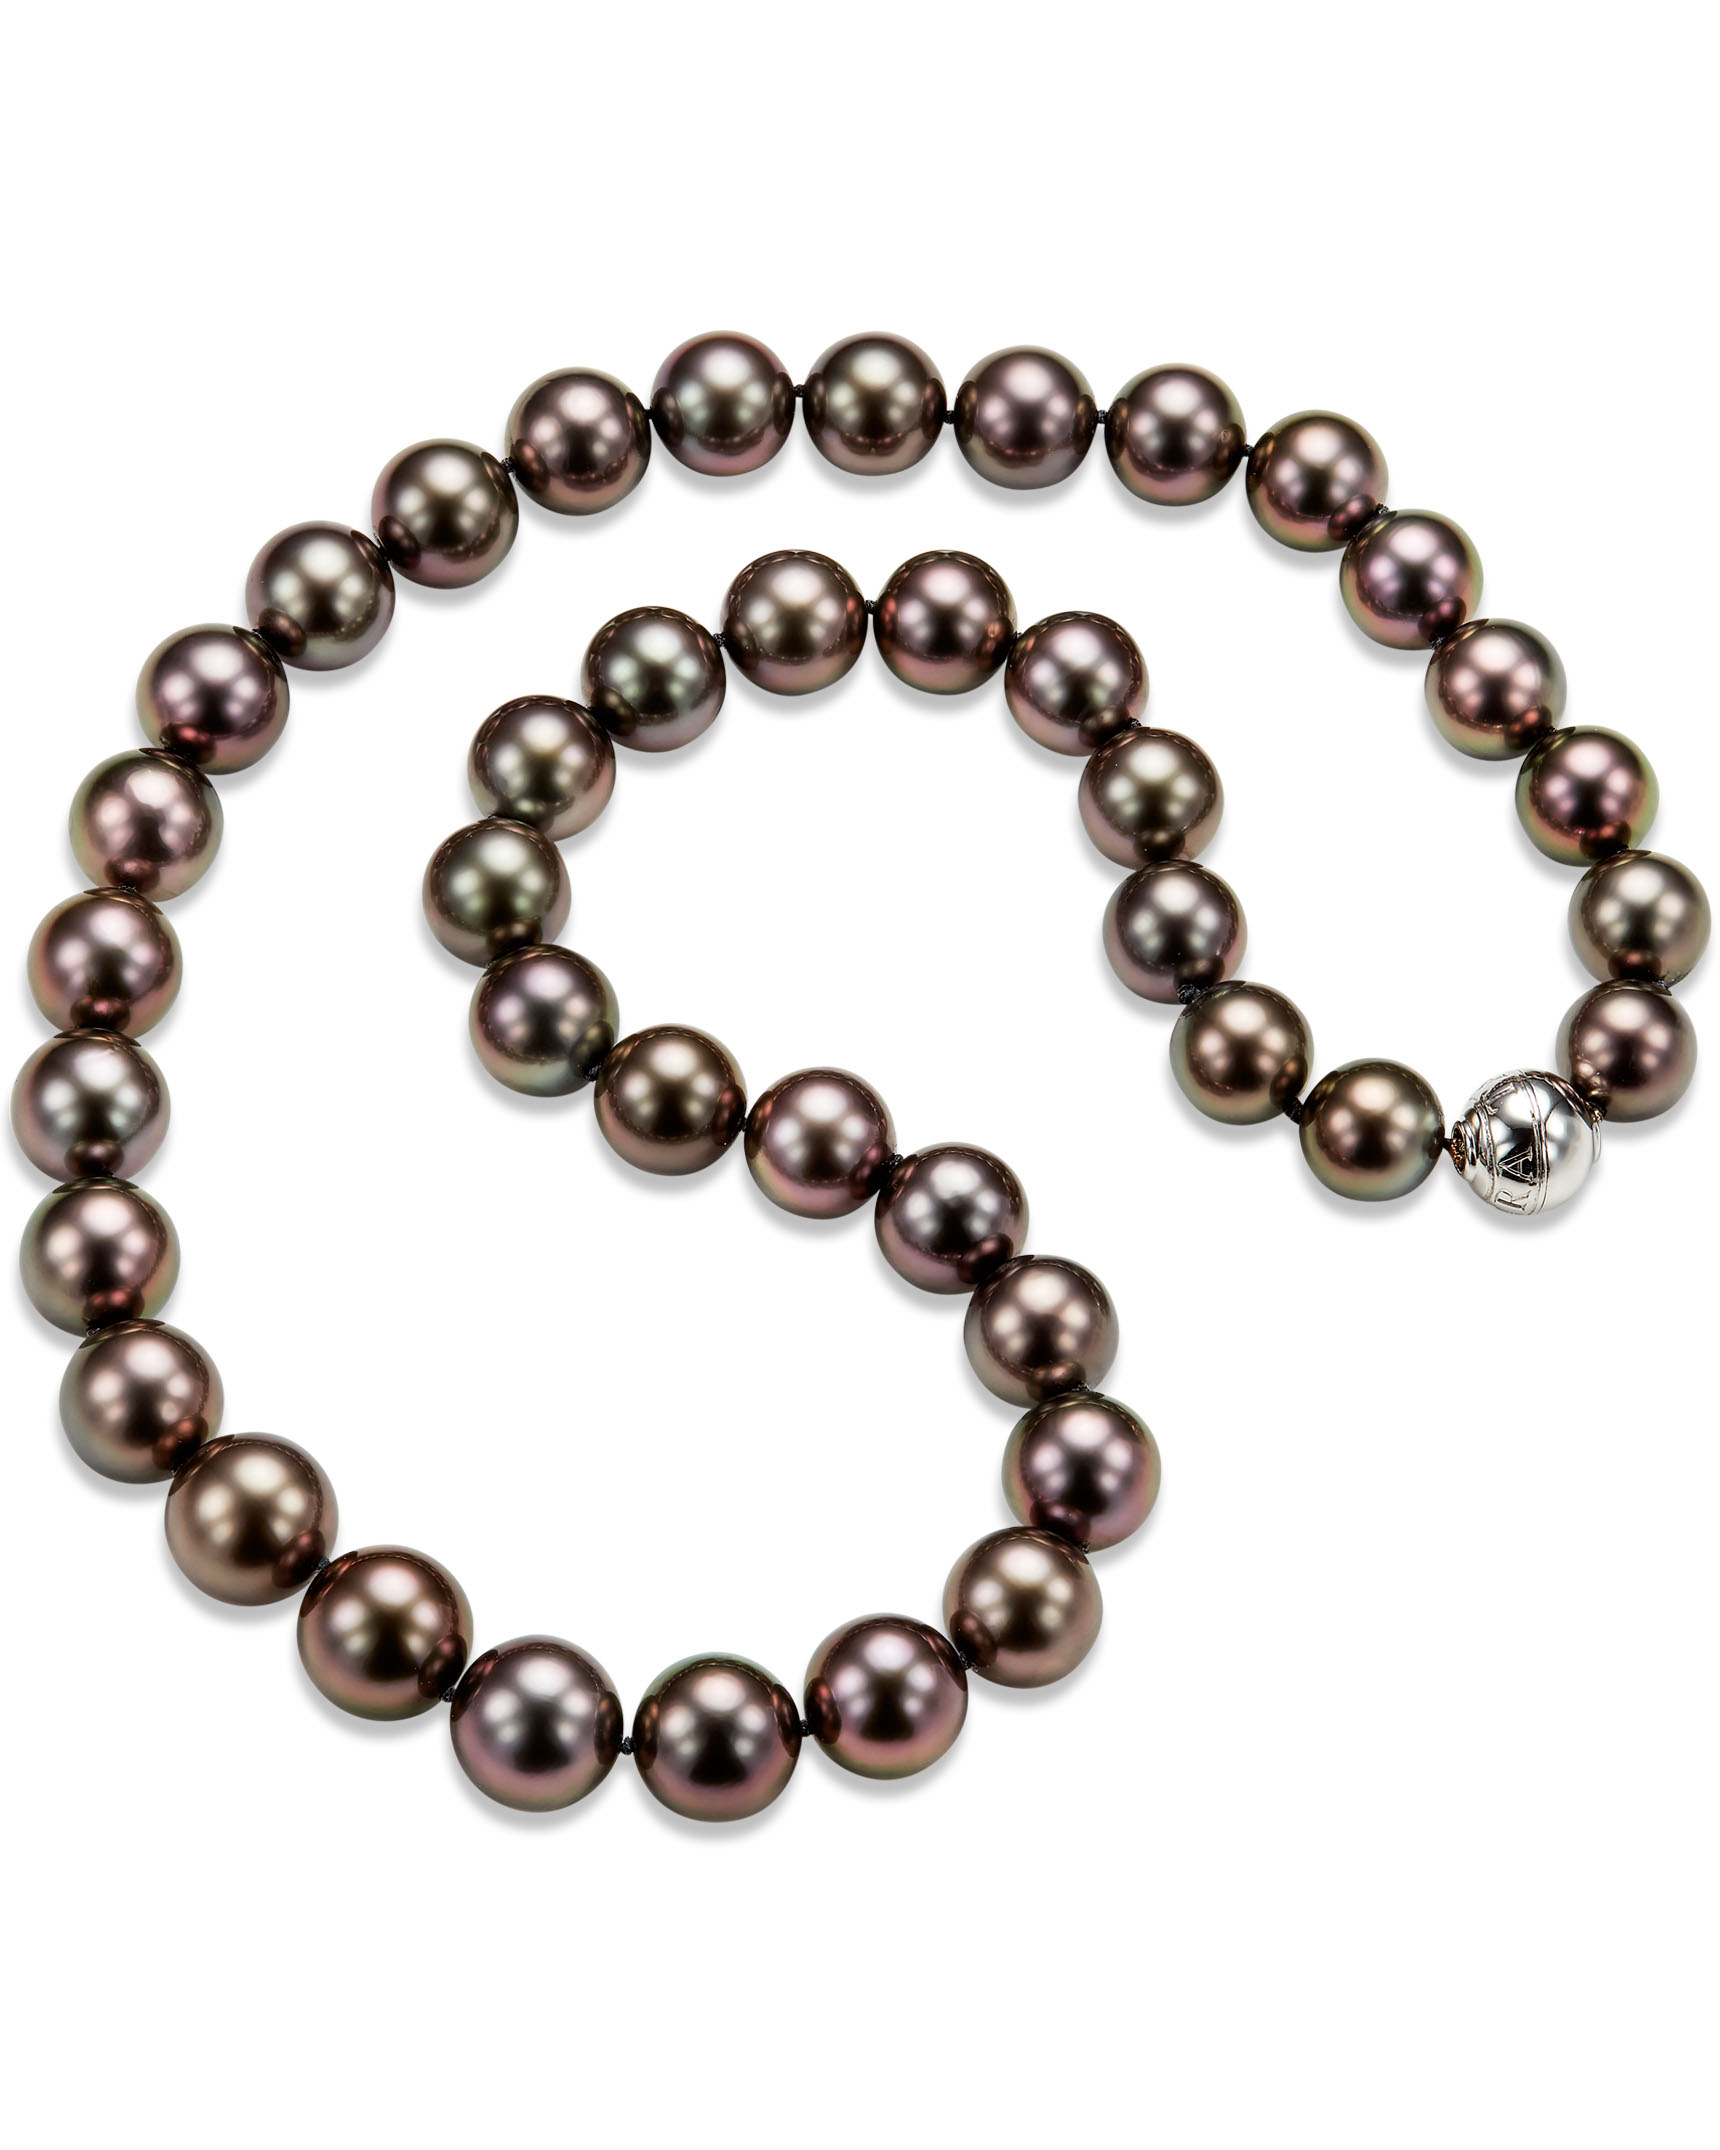 Black Diamond Bead Necklace - Turgeon Raine